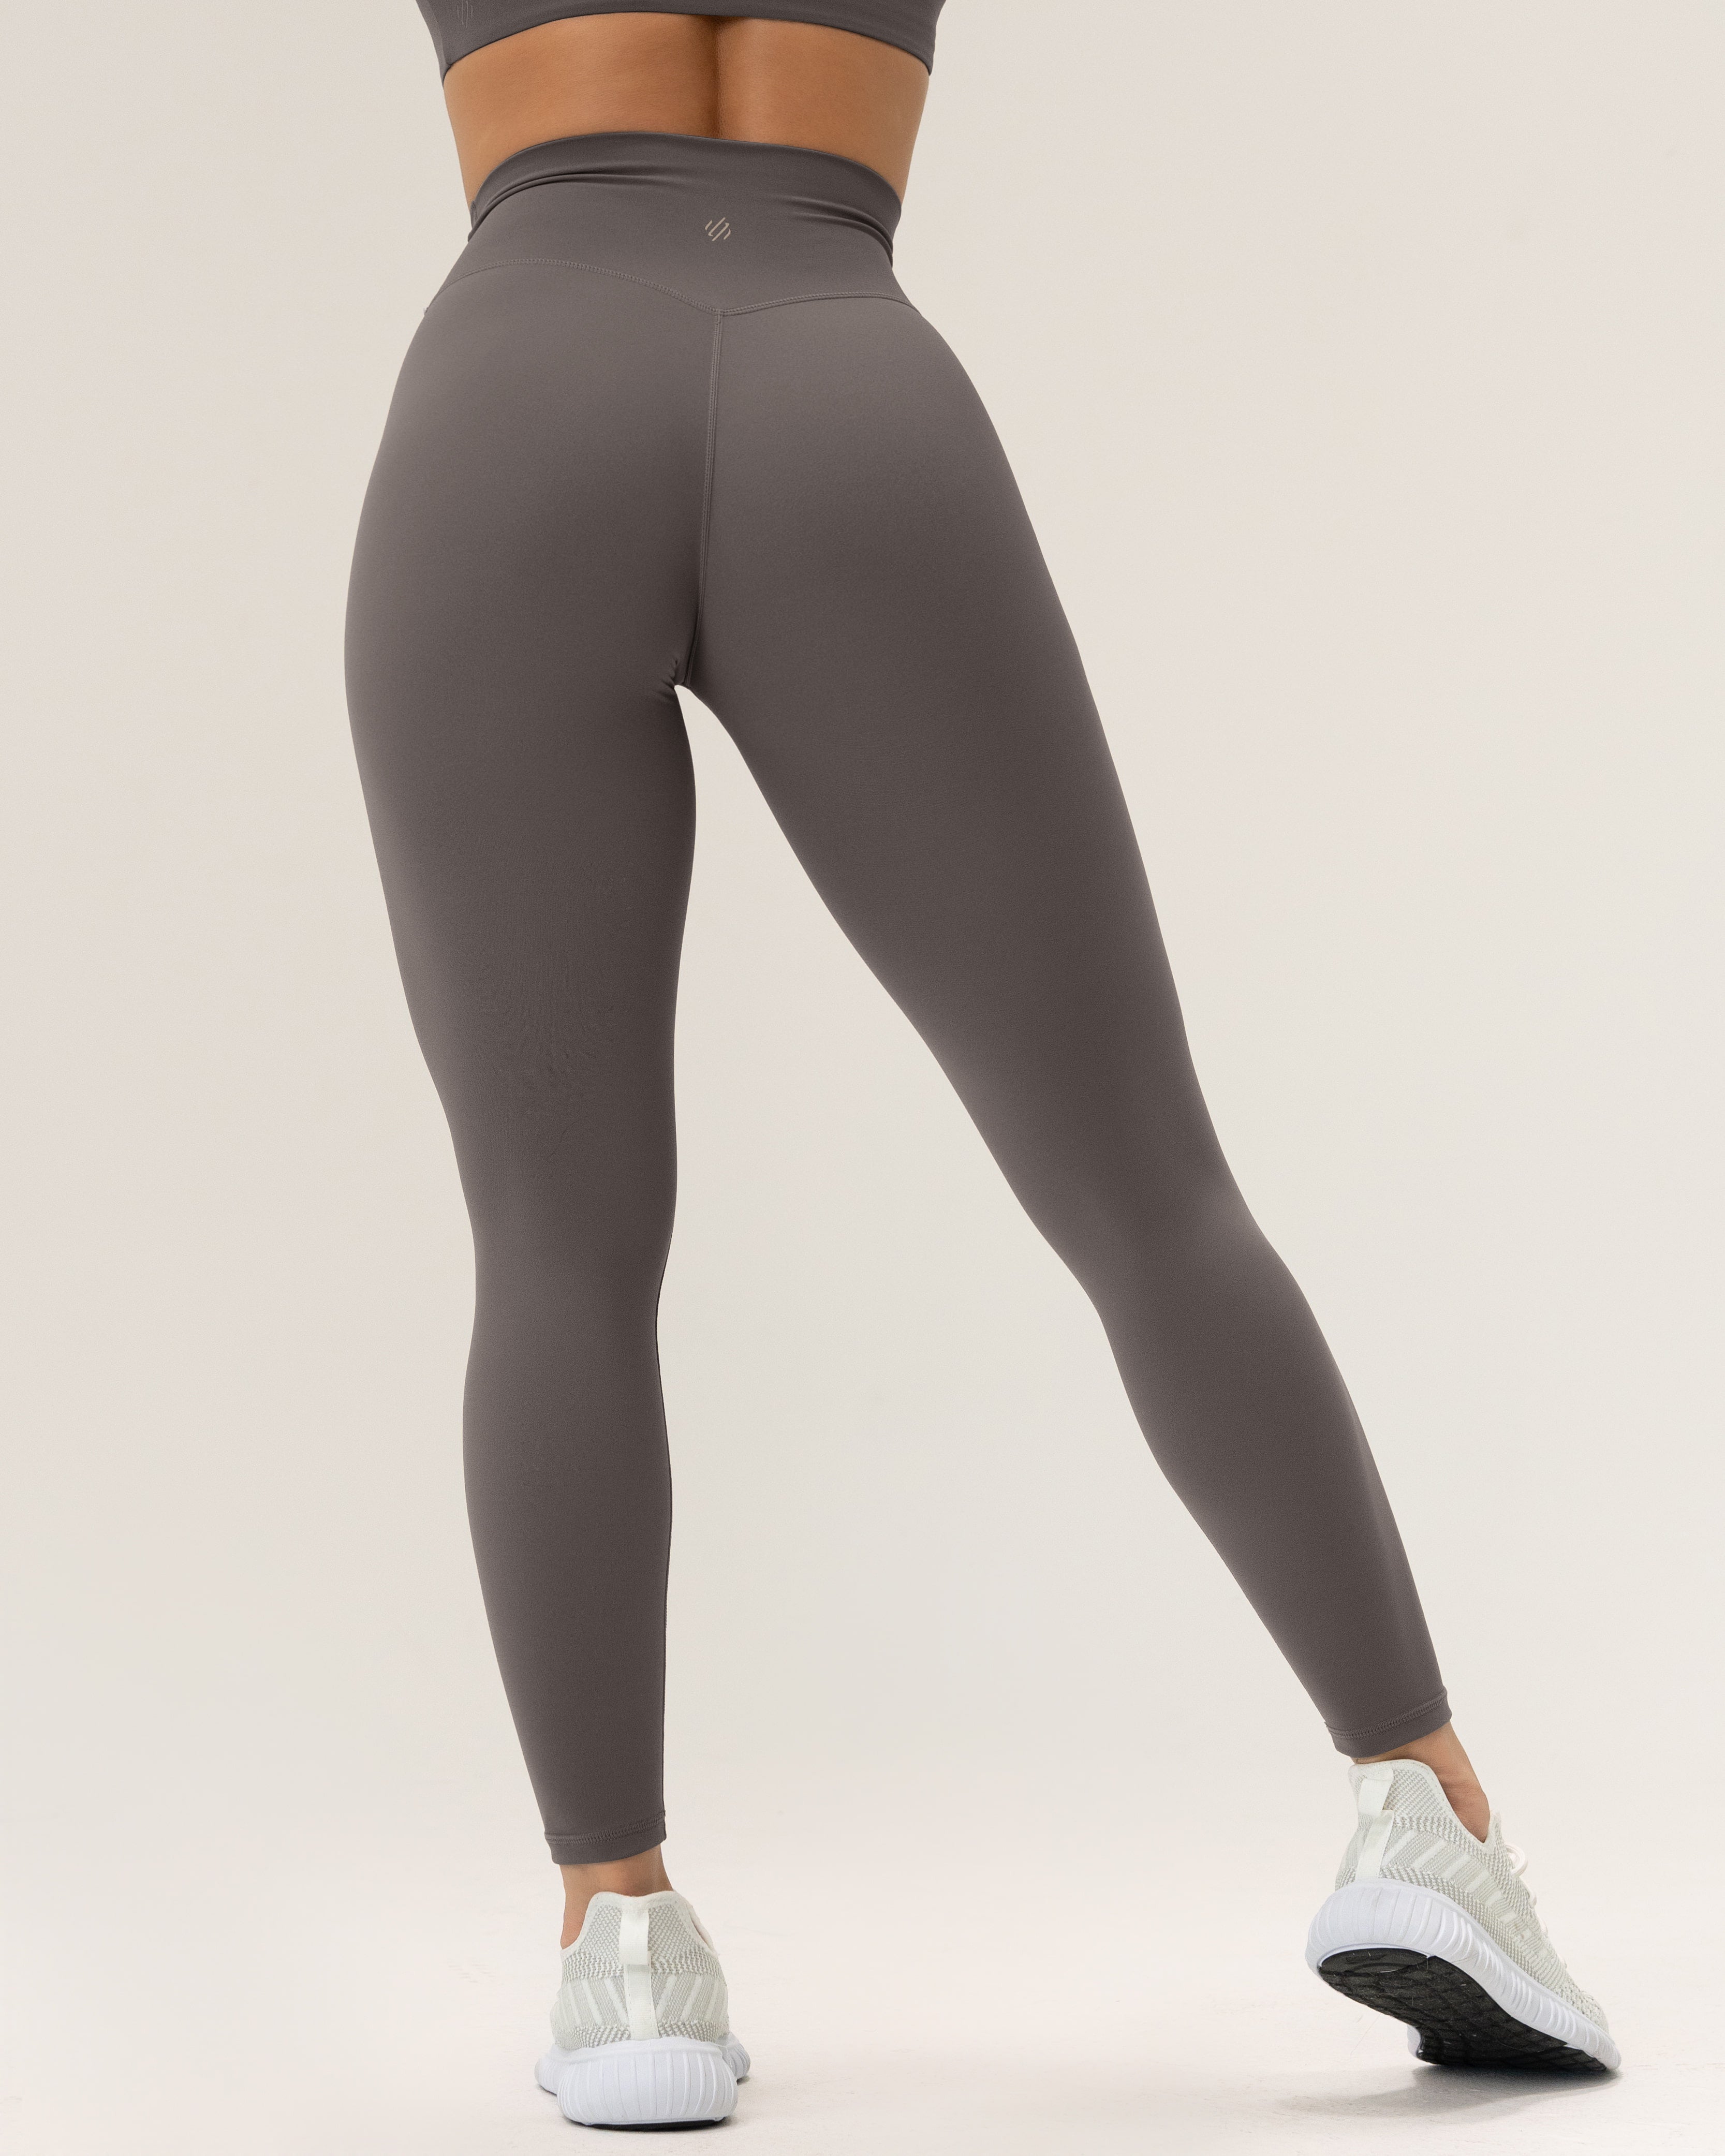 Lucia High Waisted Workout Leggings - Light Grey